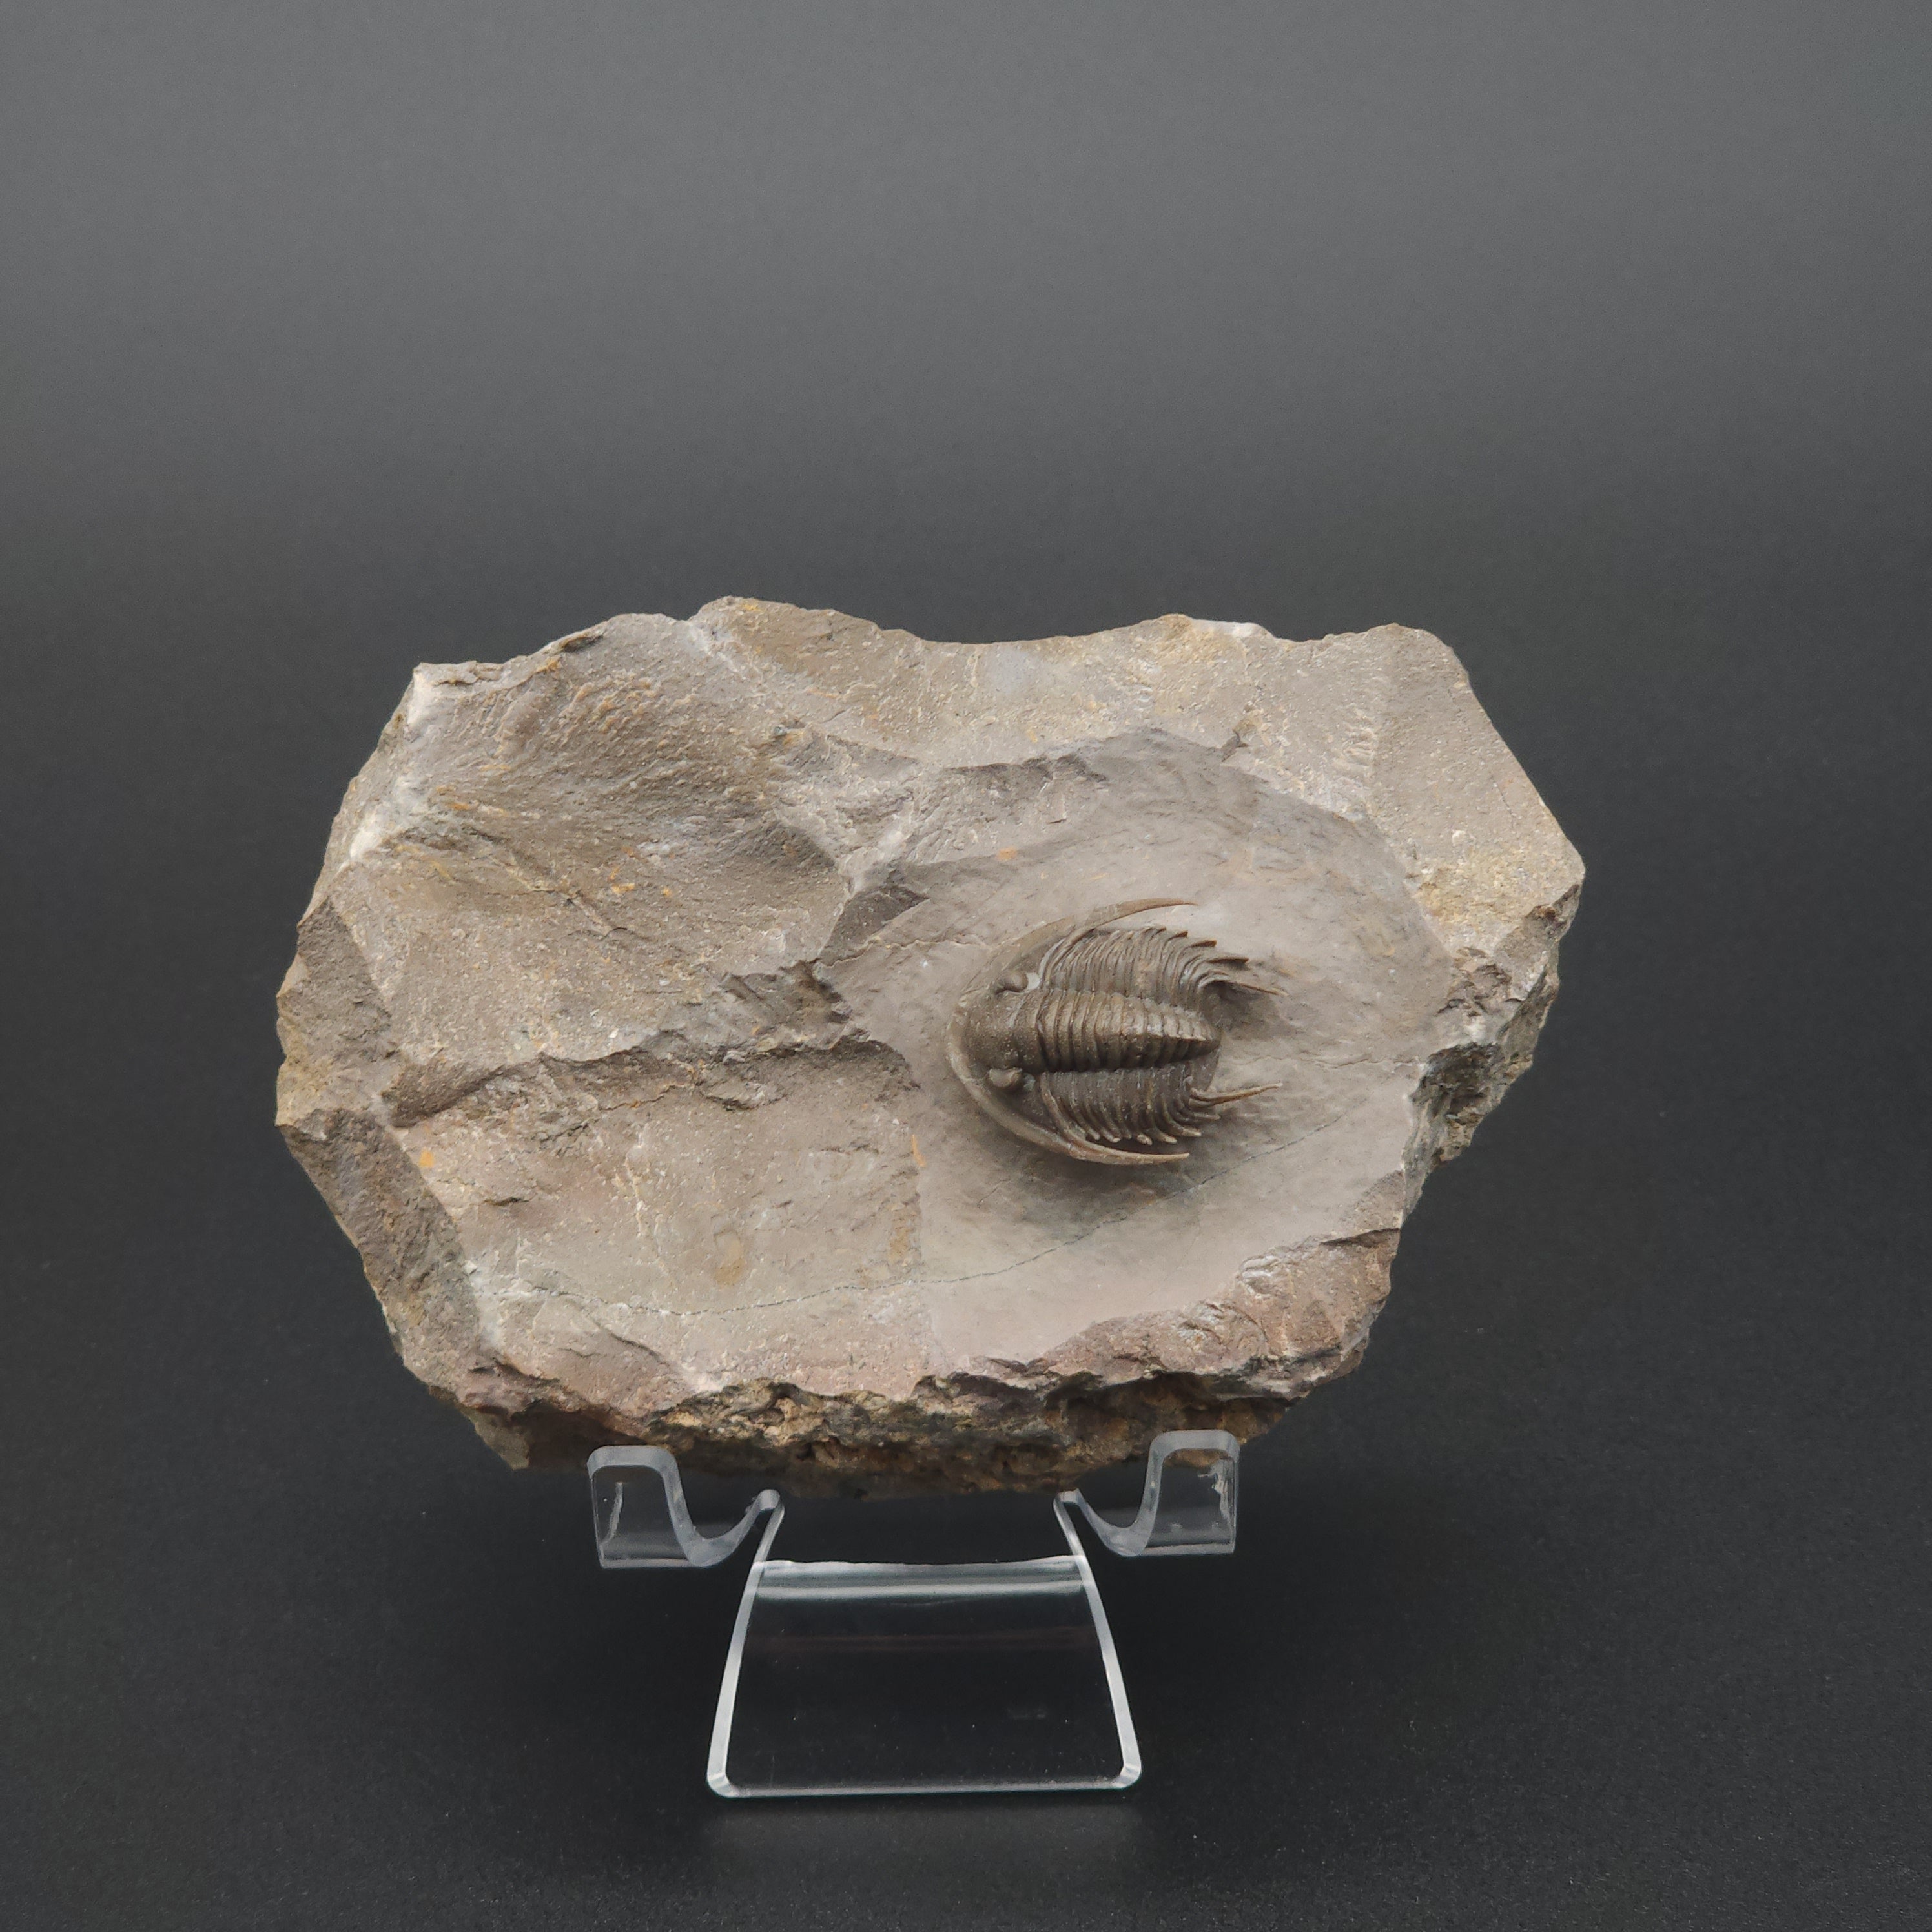 Rare Proetid (Xiphogonium) Trilobite - Tafraoute, Morocco